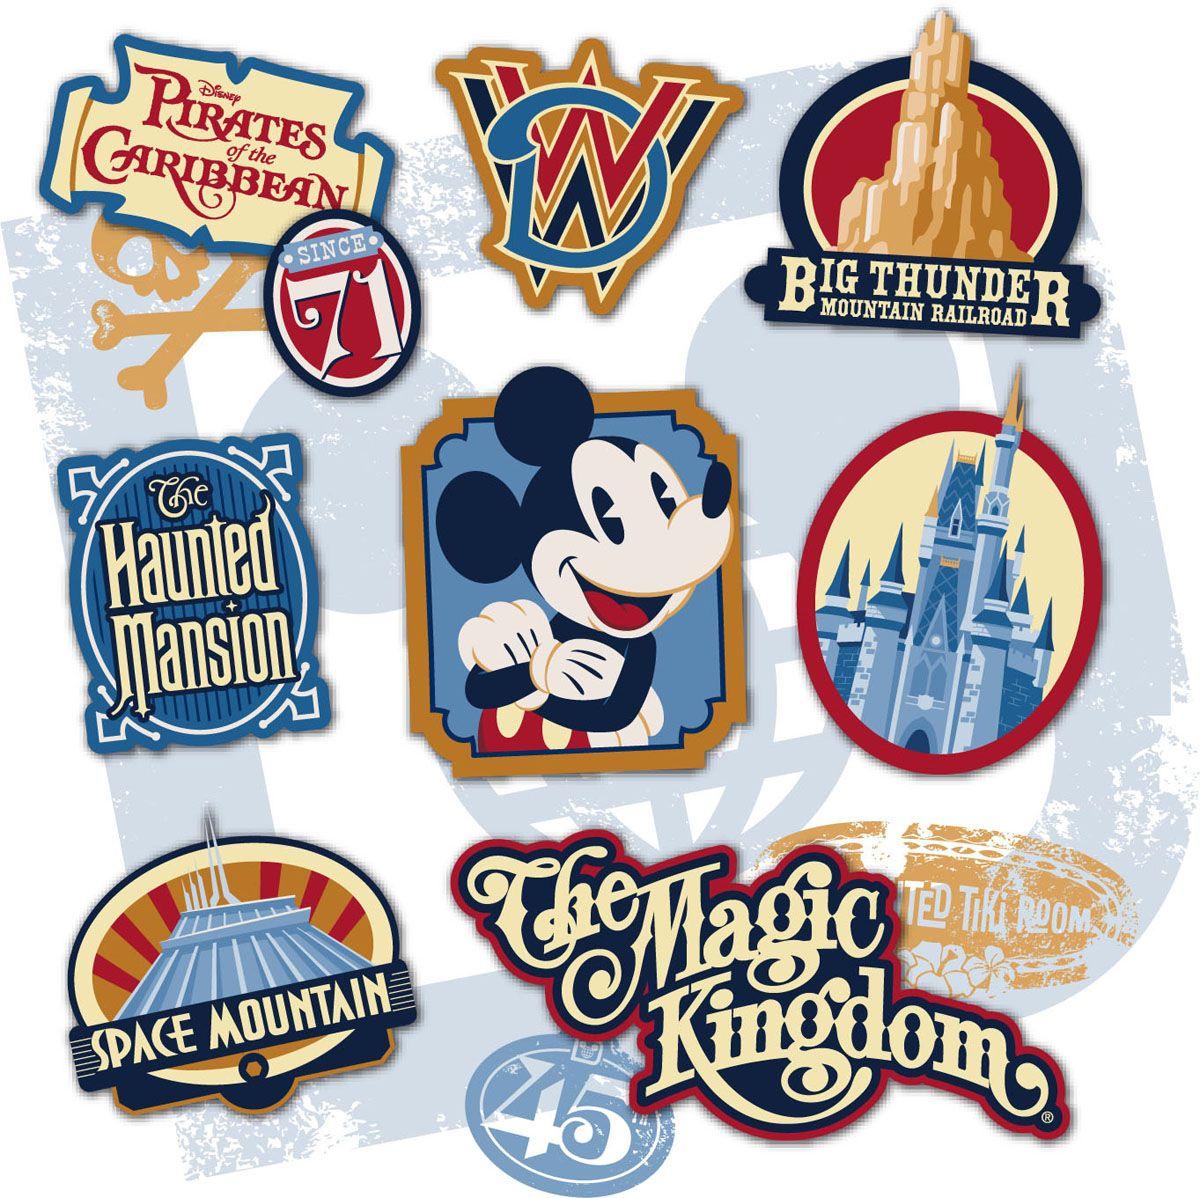 Vintage Walt Disney World Logo - First Look at Magic Kingdom 45th Anniversary Merchandise Artwork ...